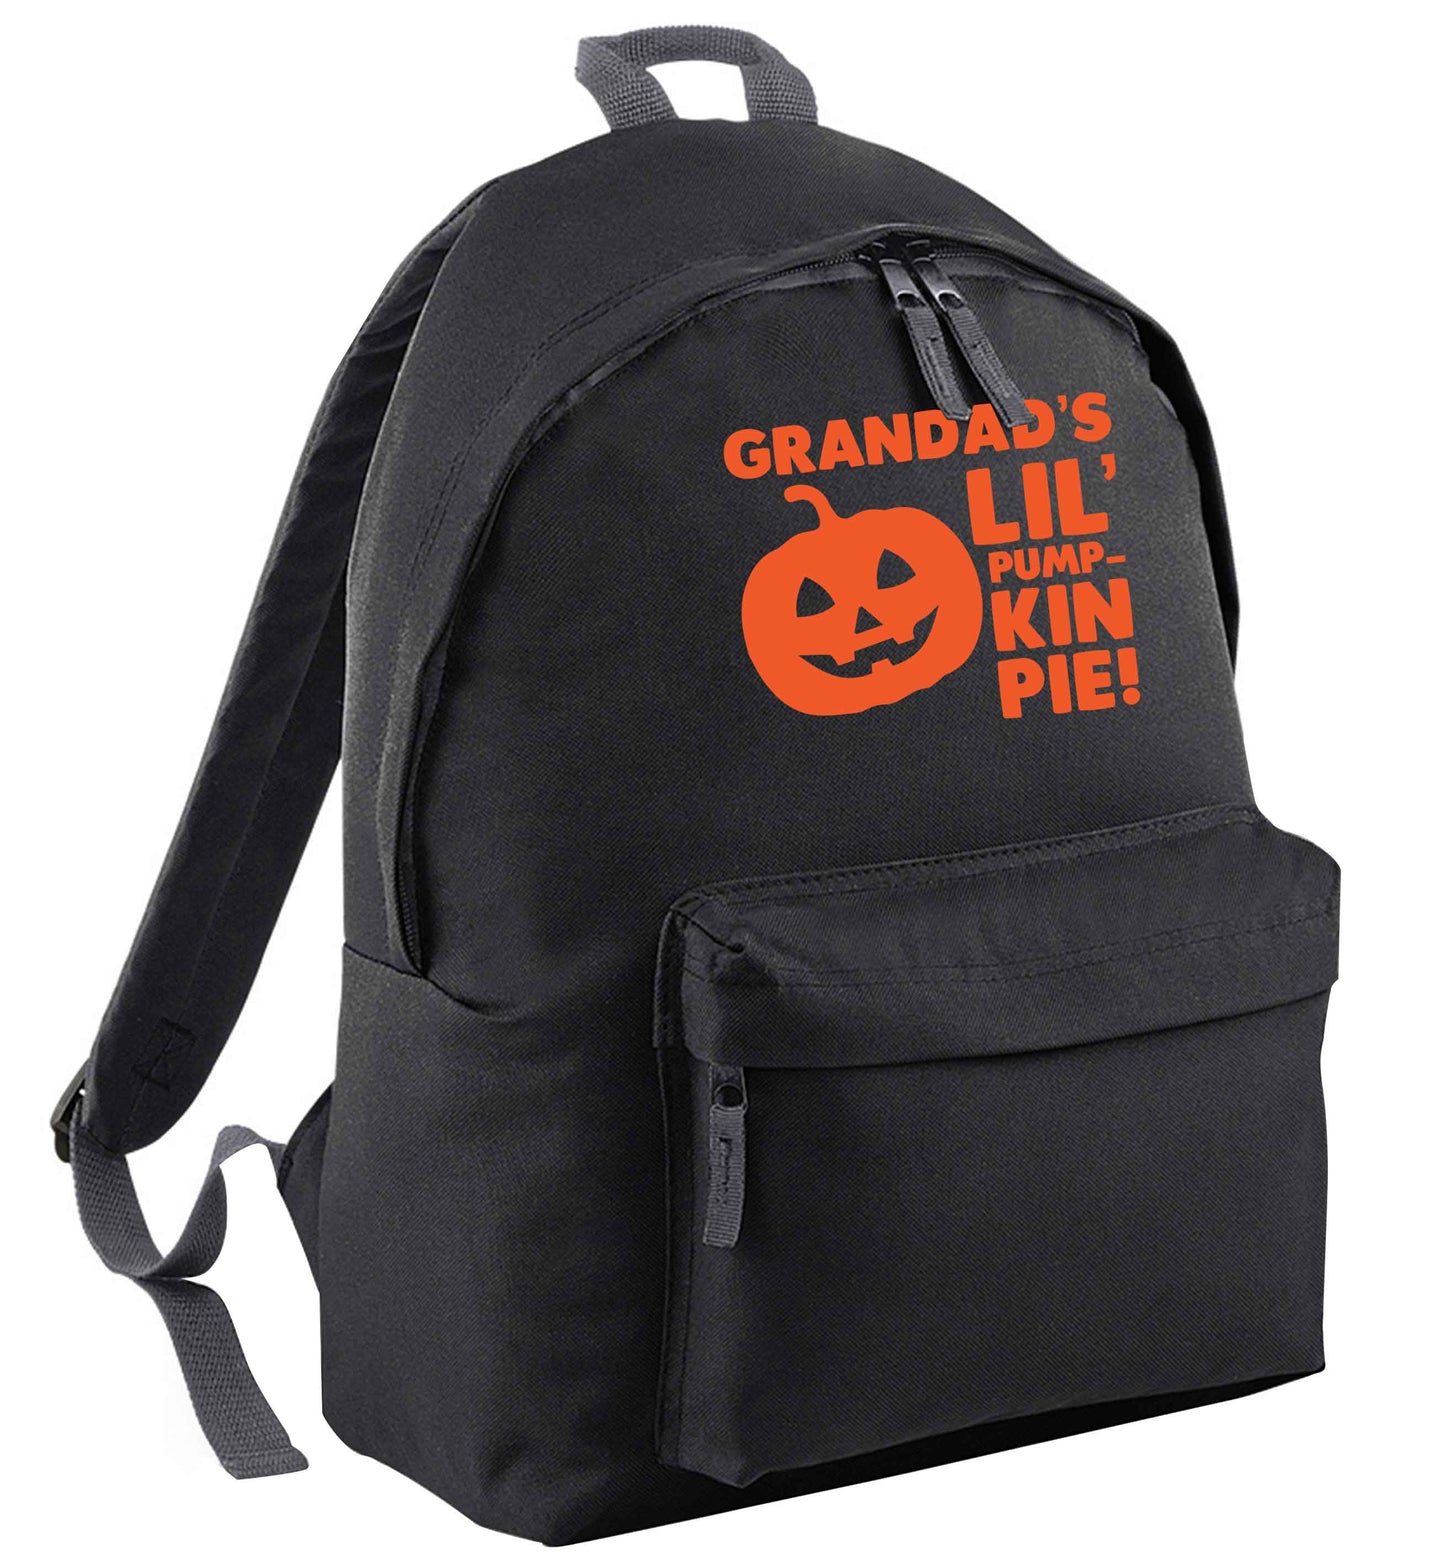 Grandad's lil' pumpkin pie black adults backpack